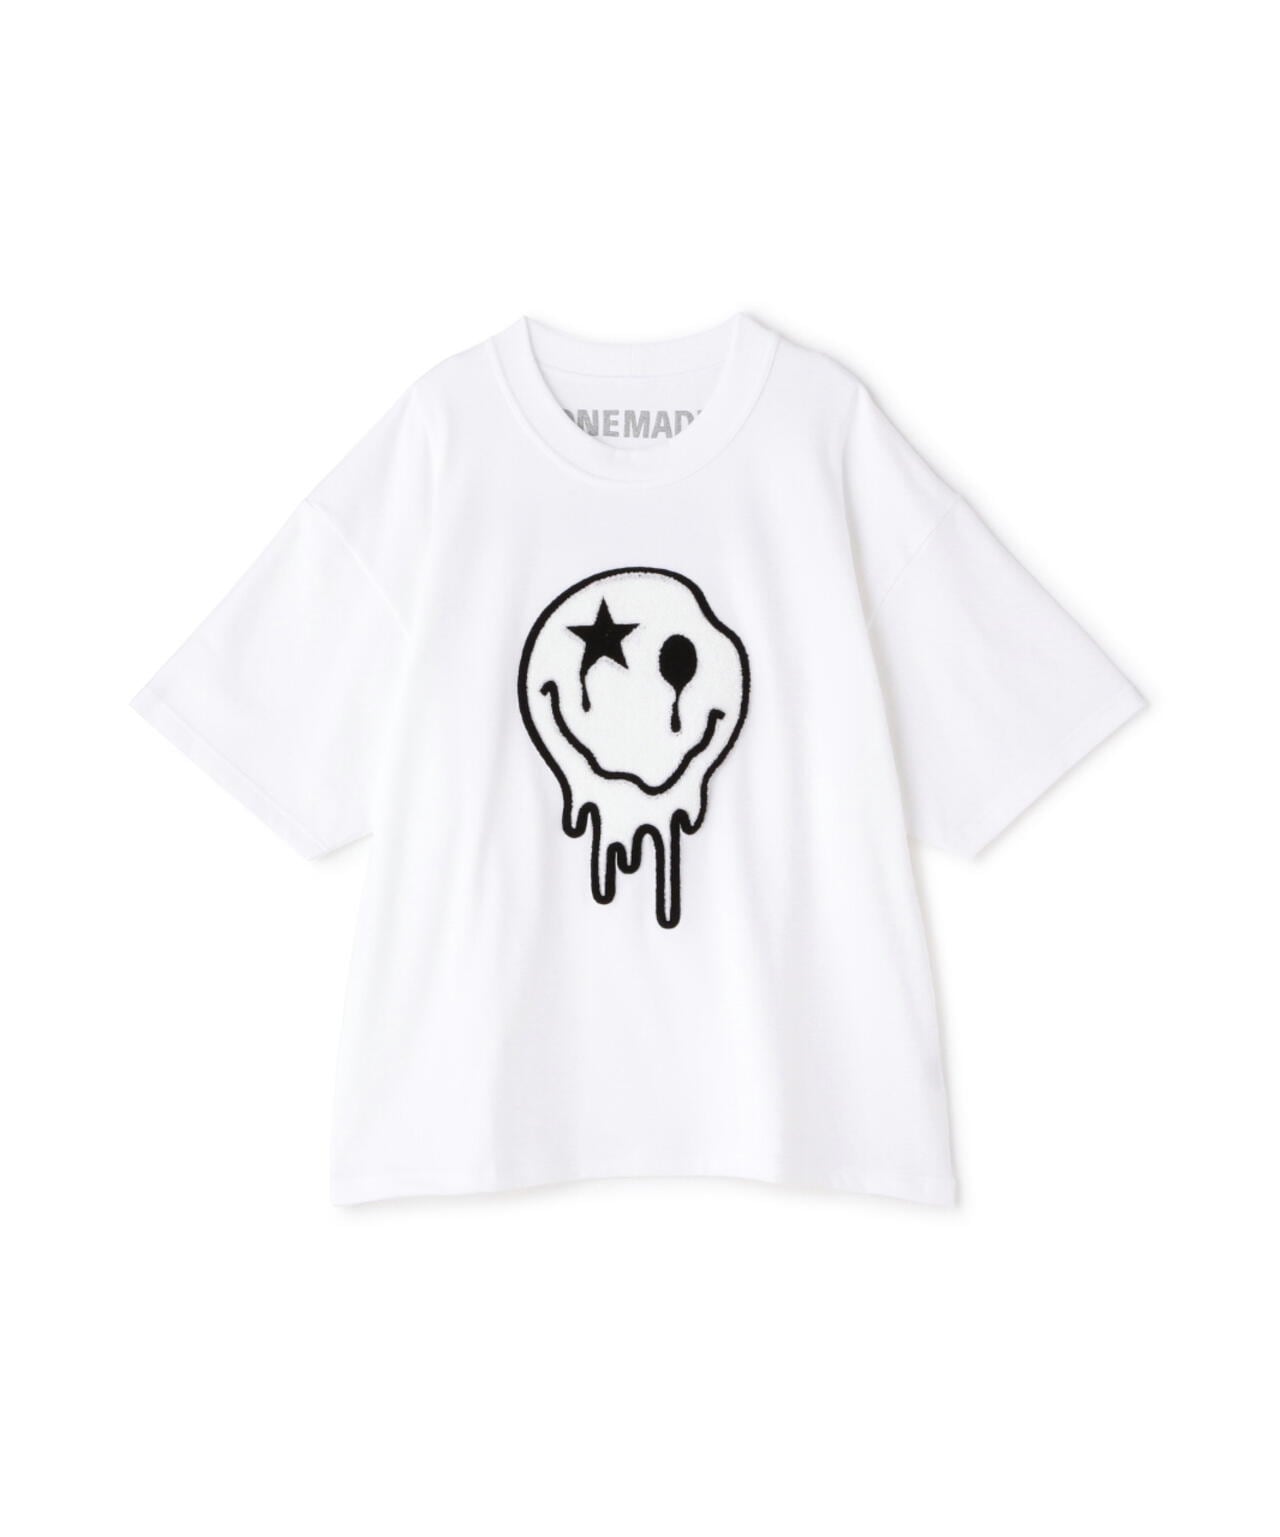 ONE MADE(ワンメイド) サガラシシュウメルトニコTシャツ/ホワイト | B